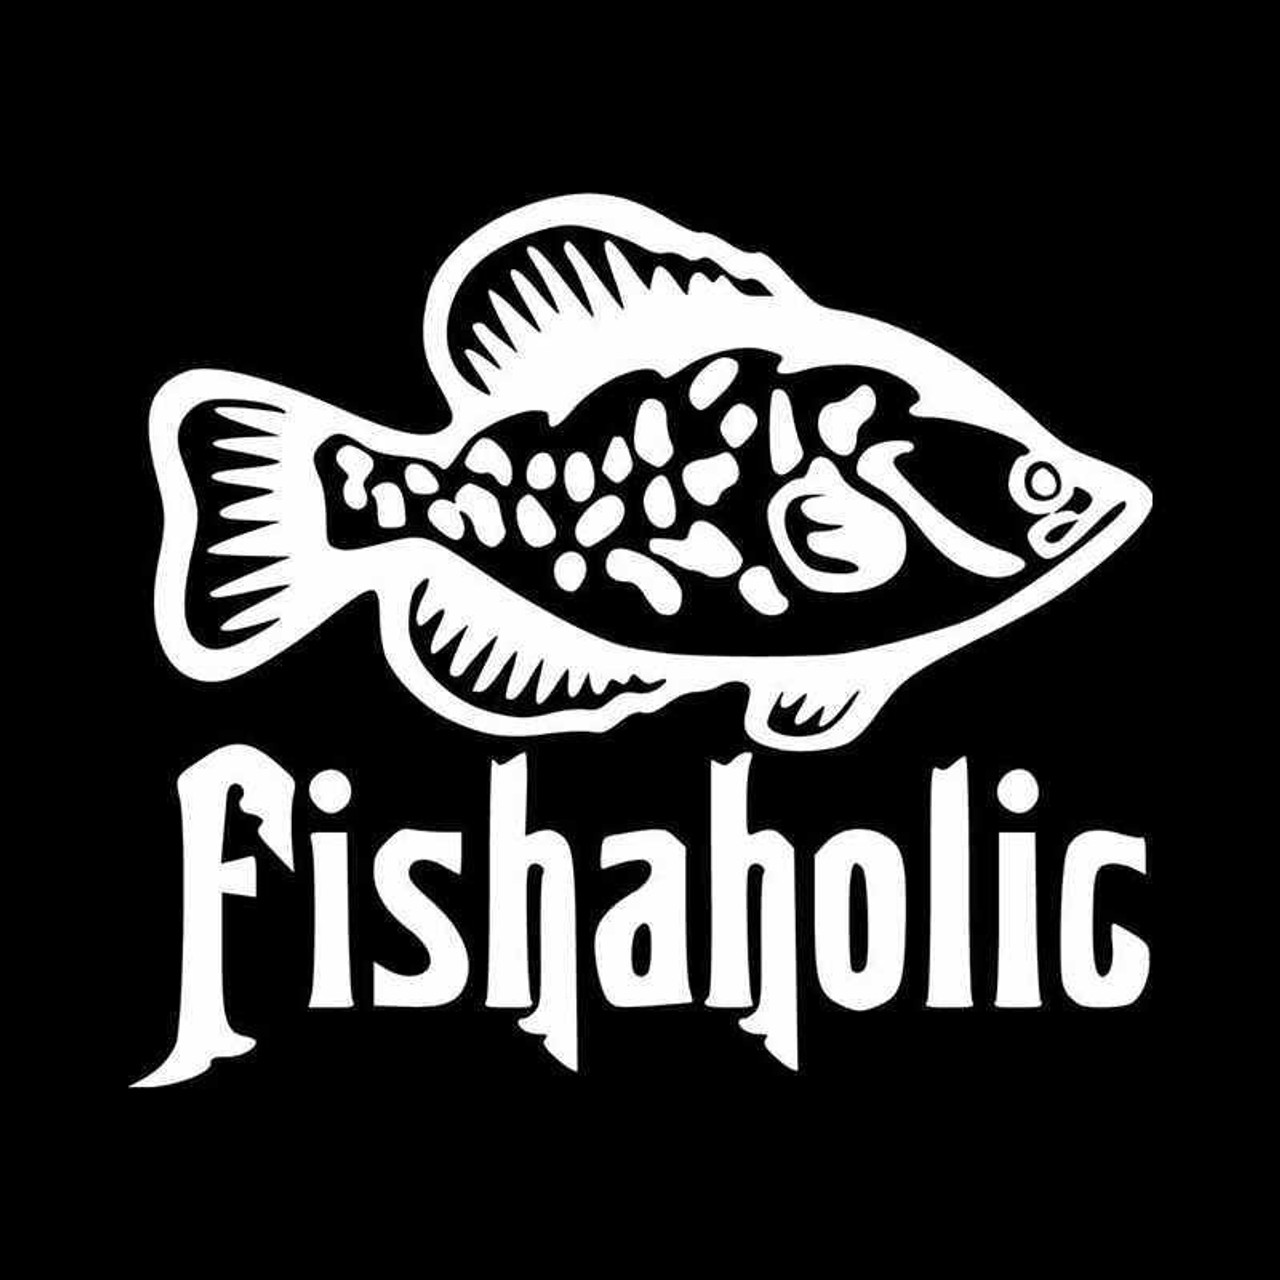 Crappie Fishaholic Vinyl Decal Sticker